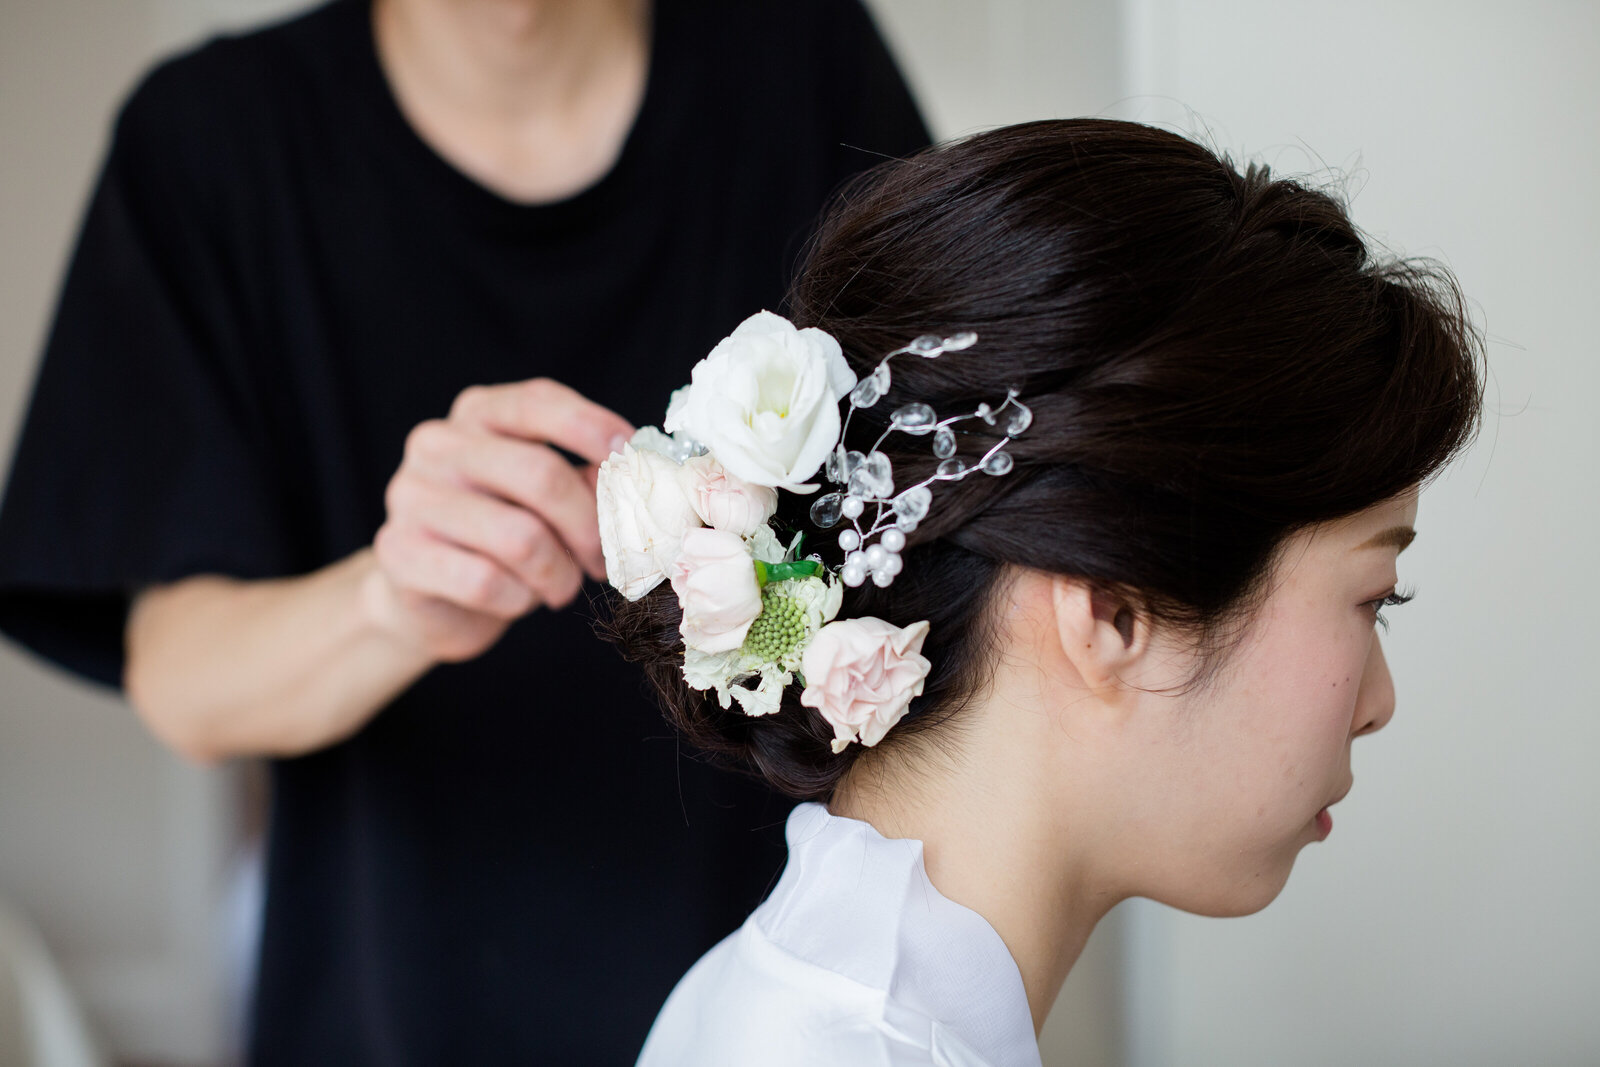 A bride having her wedding hair styled